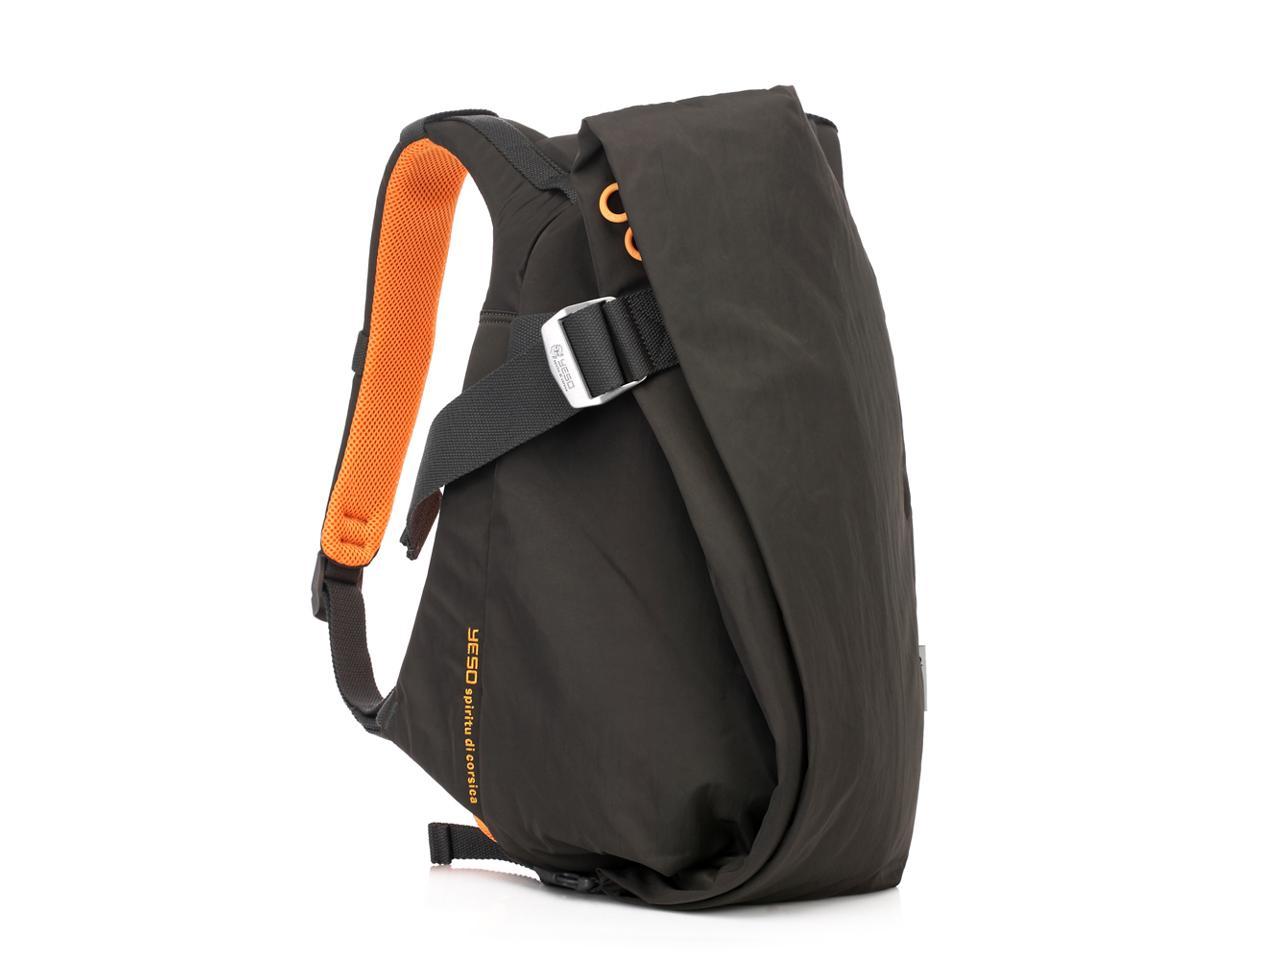 Men's Large Capacity Backpack Laptop Bags Nylon College Tide Casual School Bag